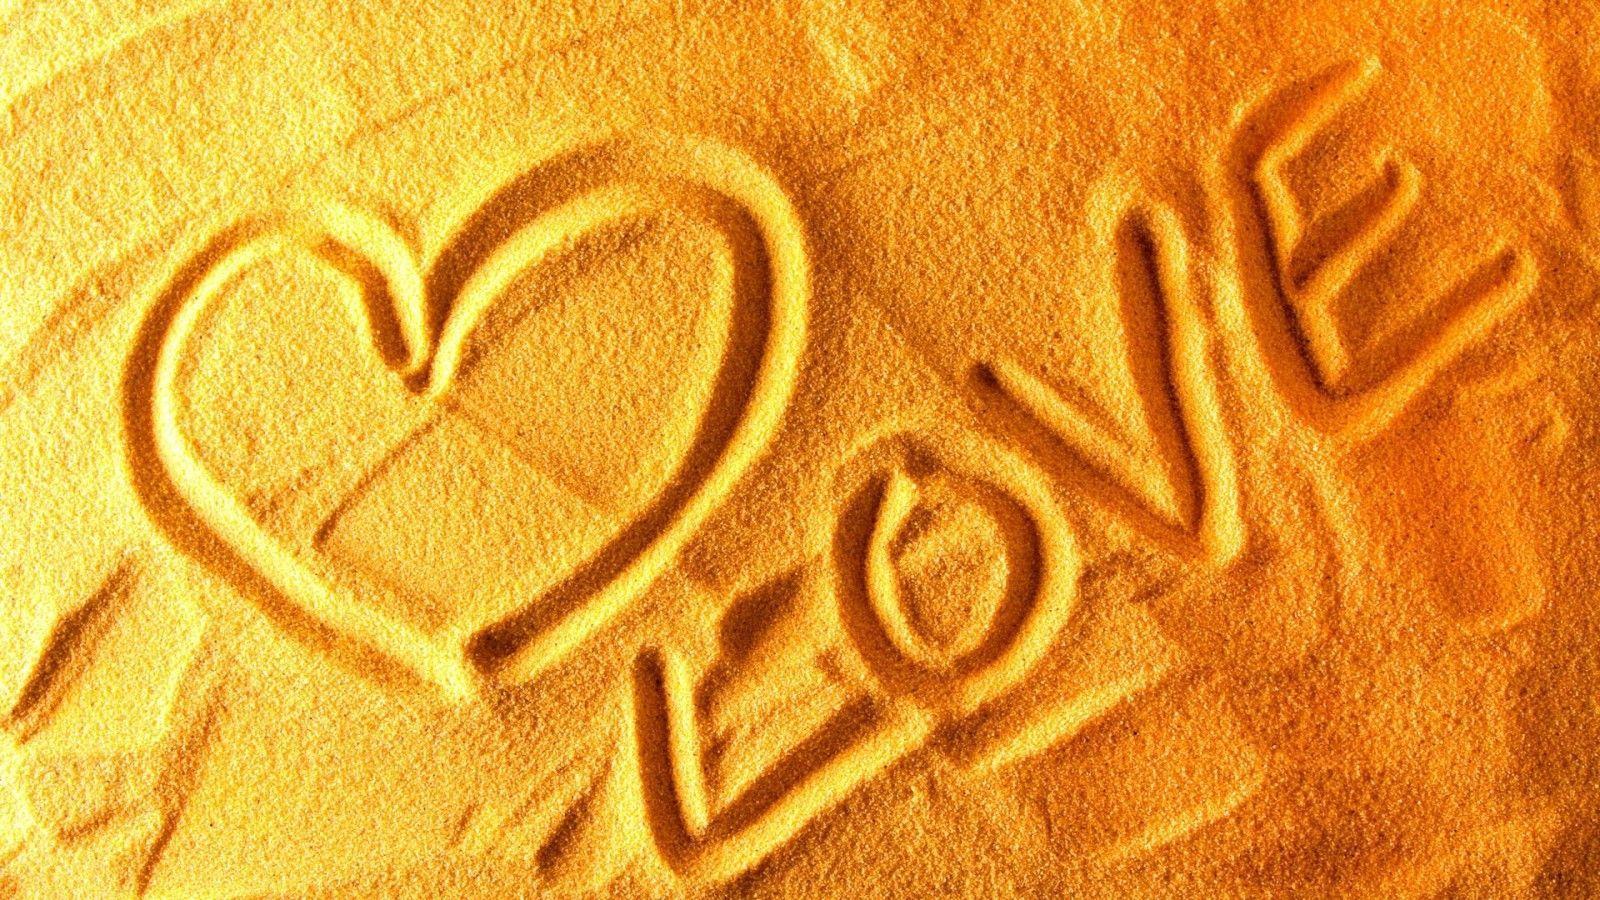 Love Word in Sand widescreen wallpaper. Wide